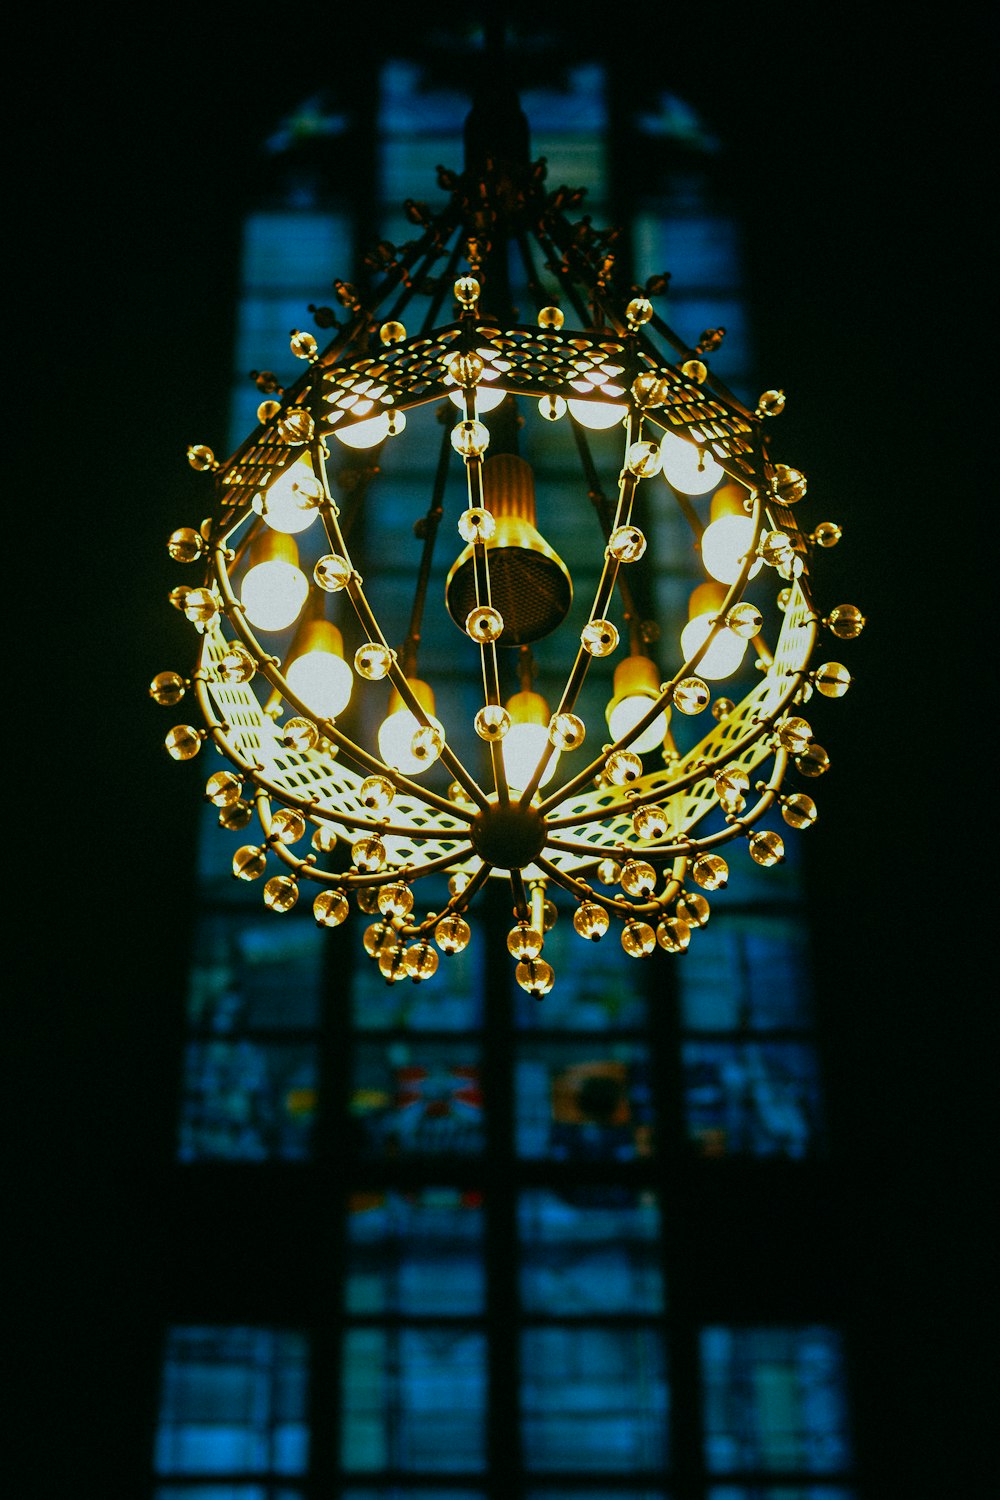 lampadario illuminato giallo con sfondo vetrata